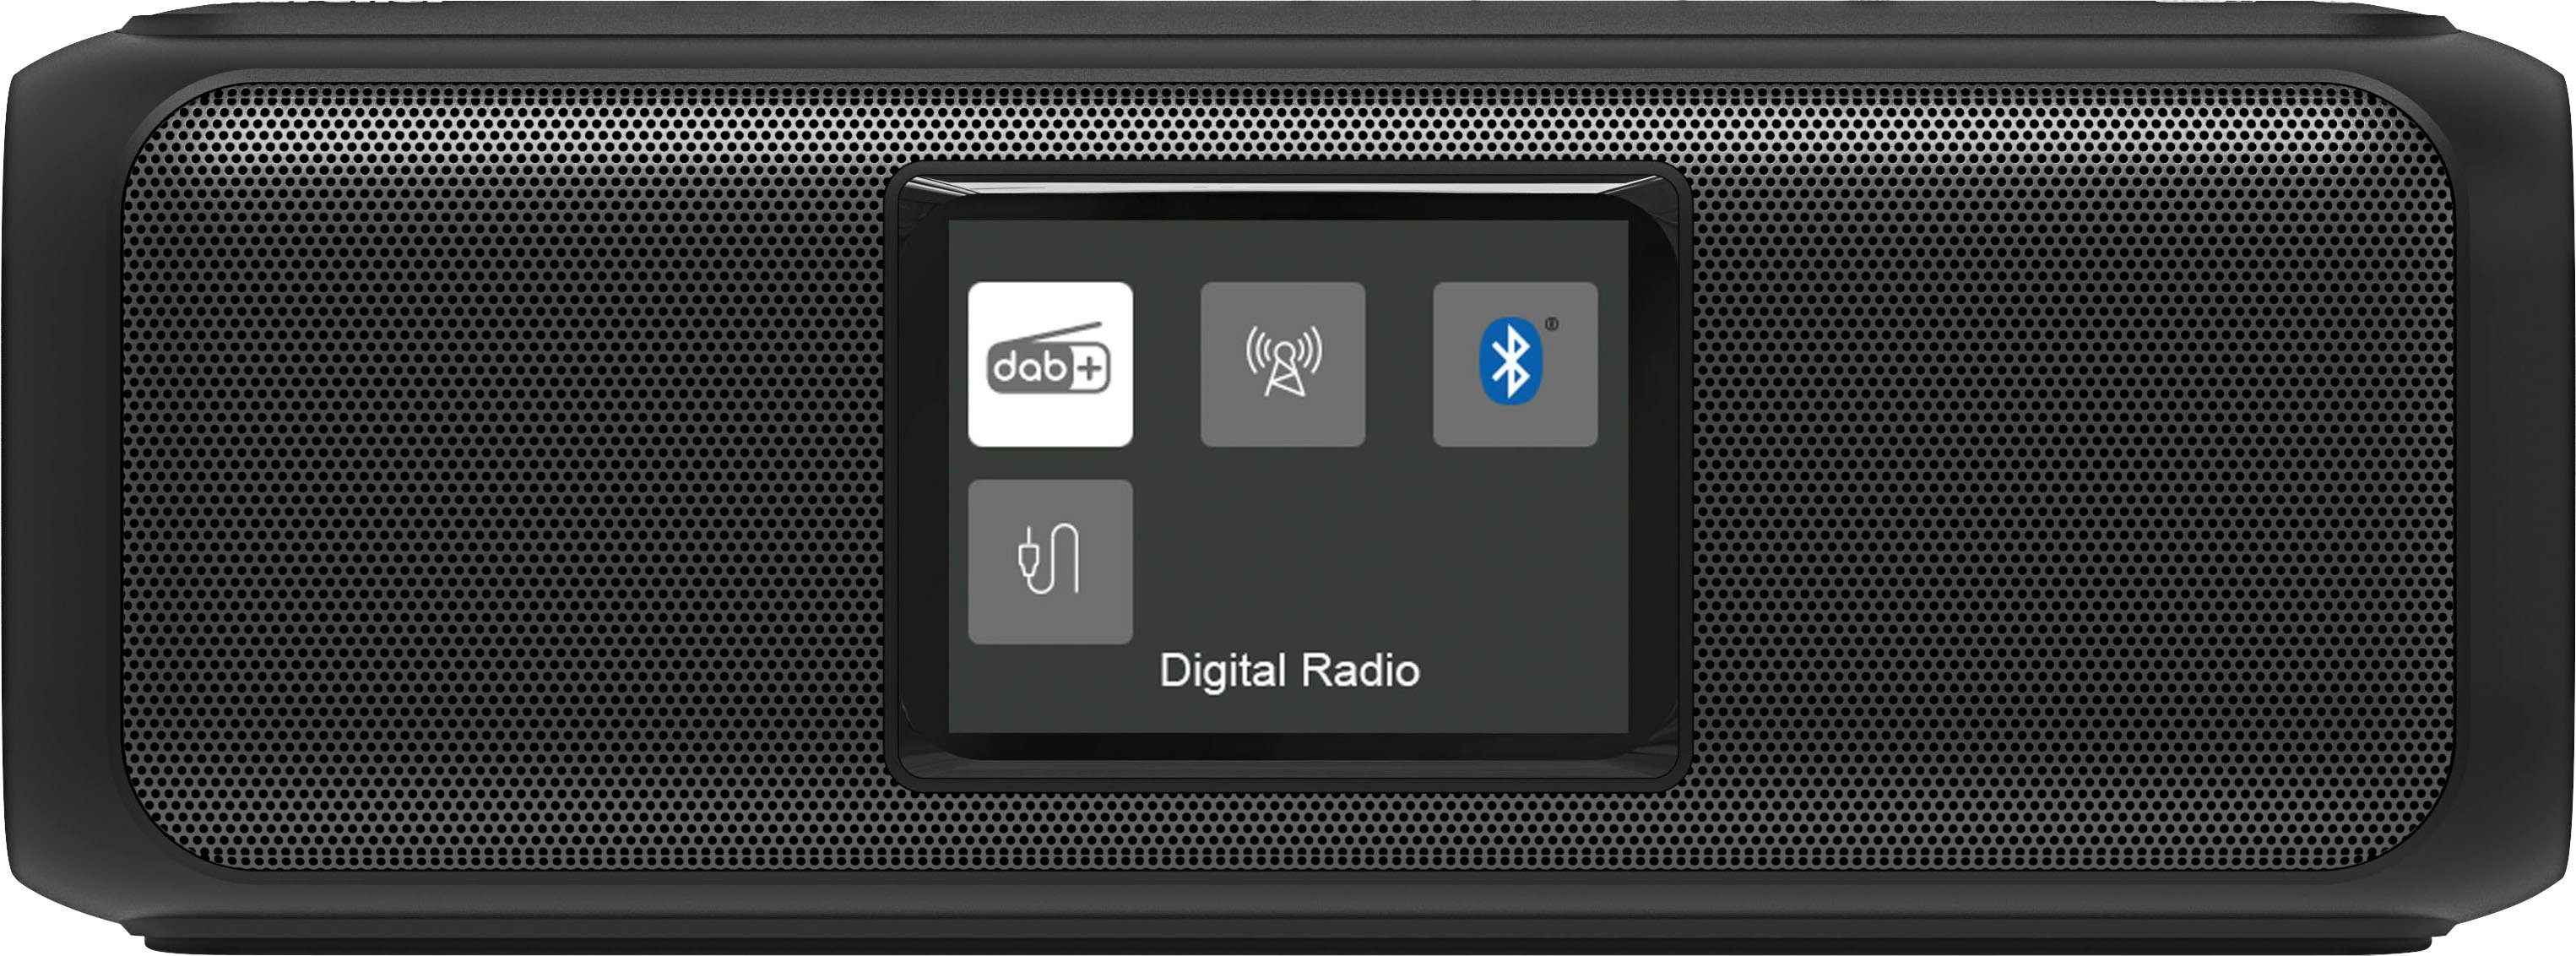 W) Bluetooth UKW (DAB), Karcher (DAB) mit 5 Digitalradio Lautsprecher DAB RDS, Go (Digitalradio